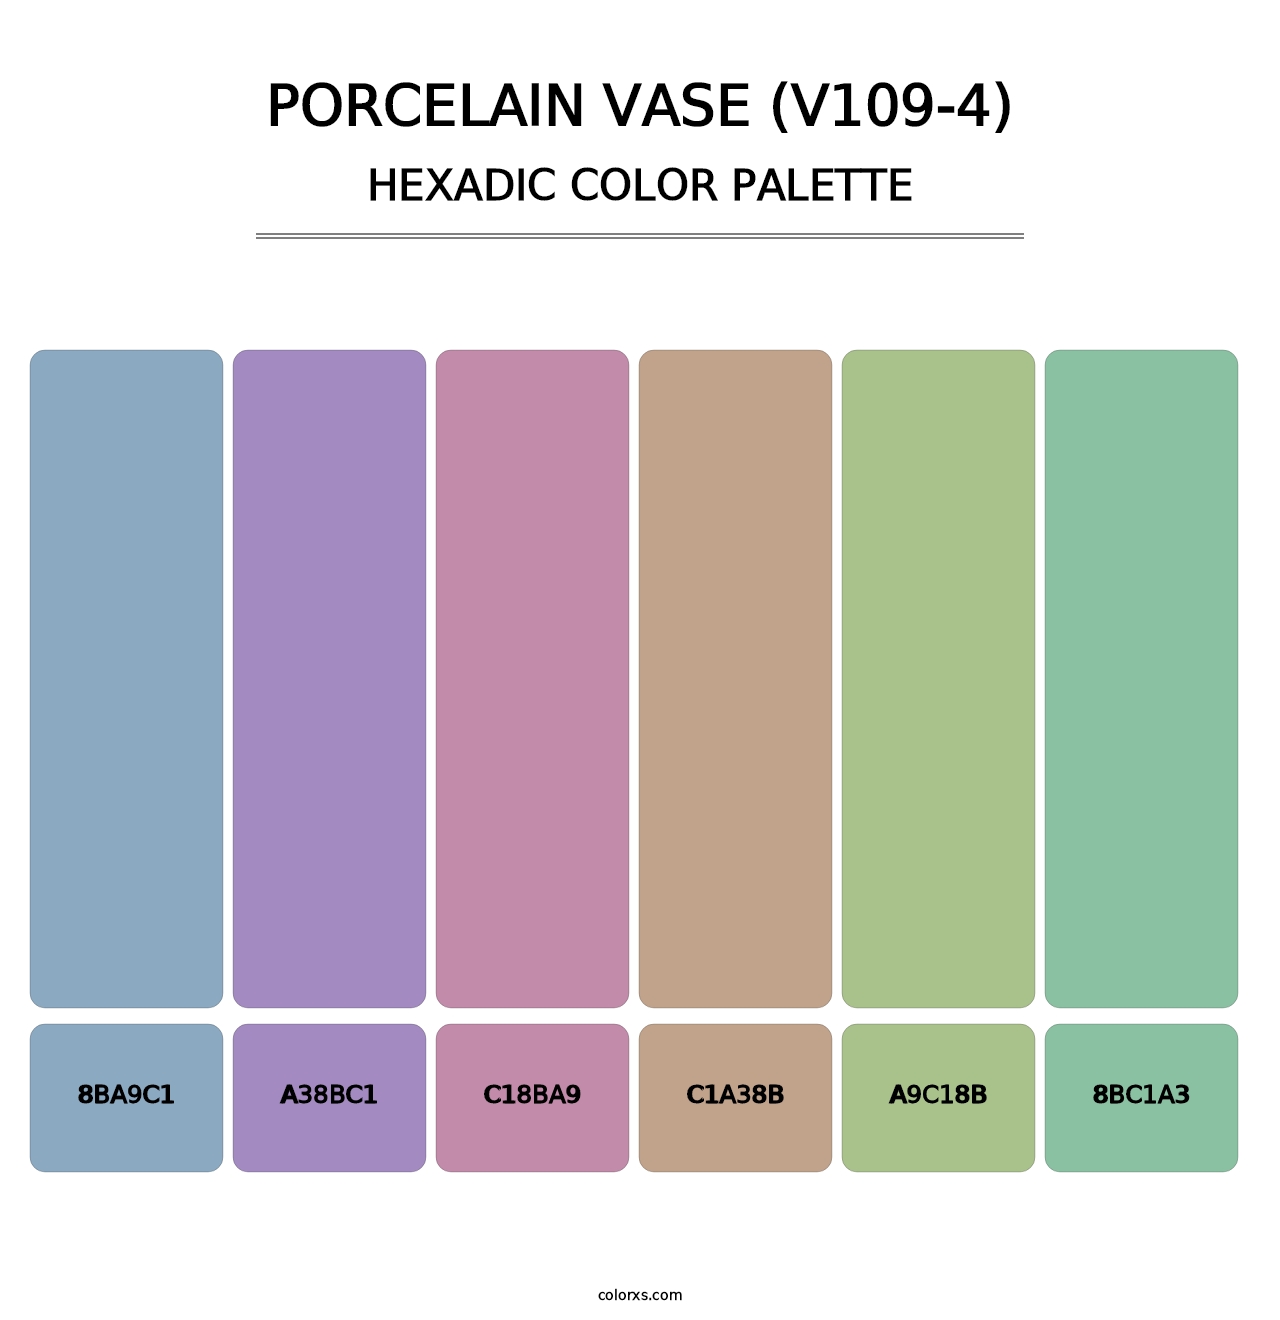 Porcelain Vase (V109-4) - Hexadic Color Palette